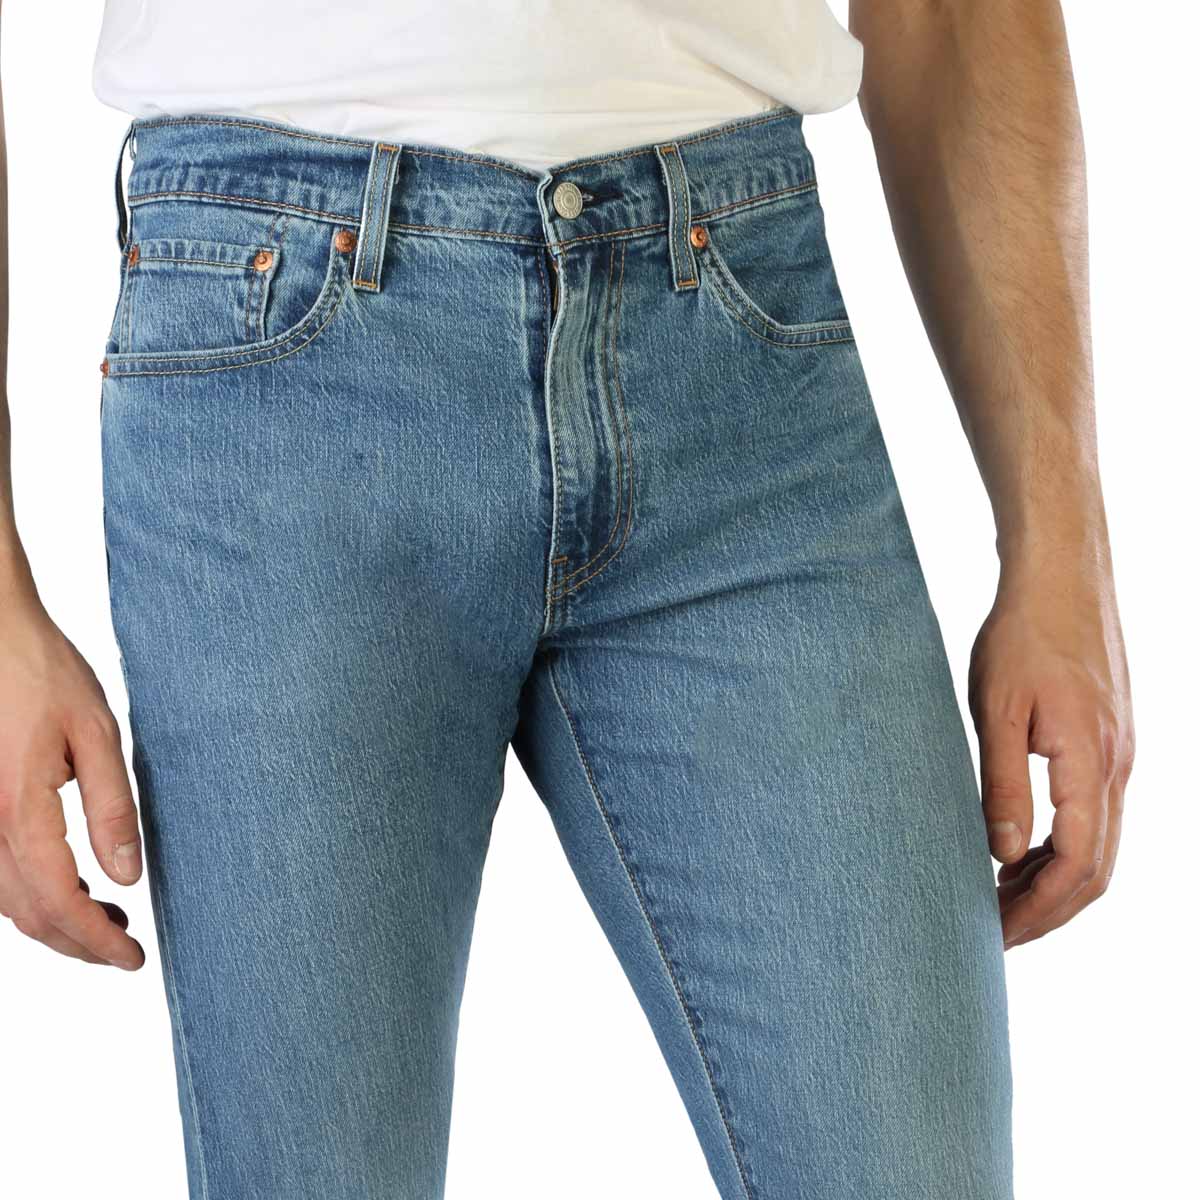 Levi's Blue Jeans for Men - 512- SLIM